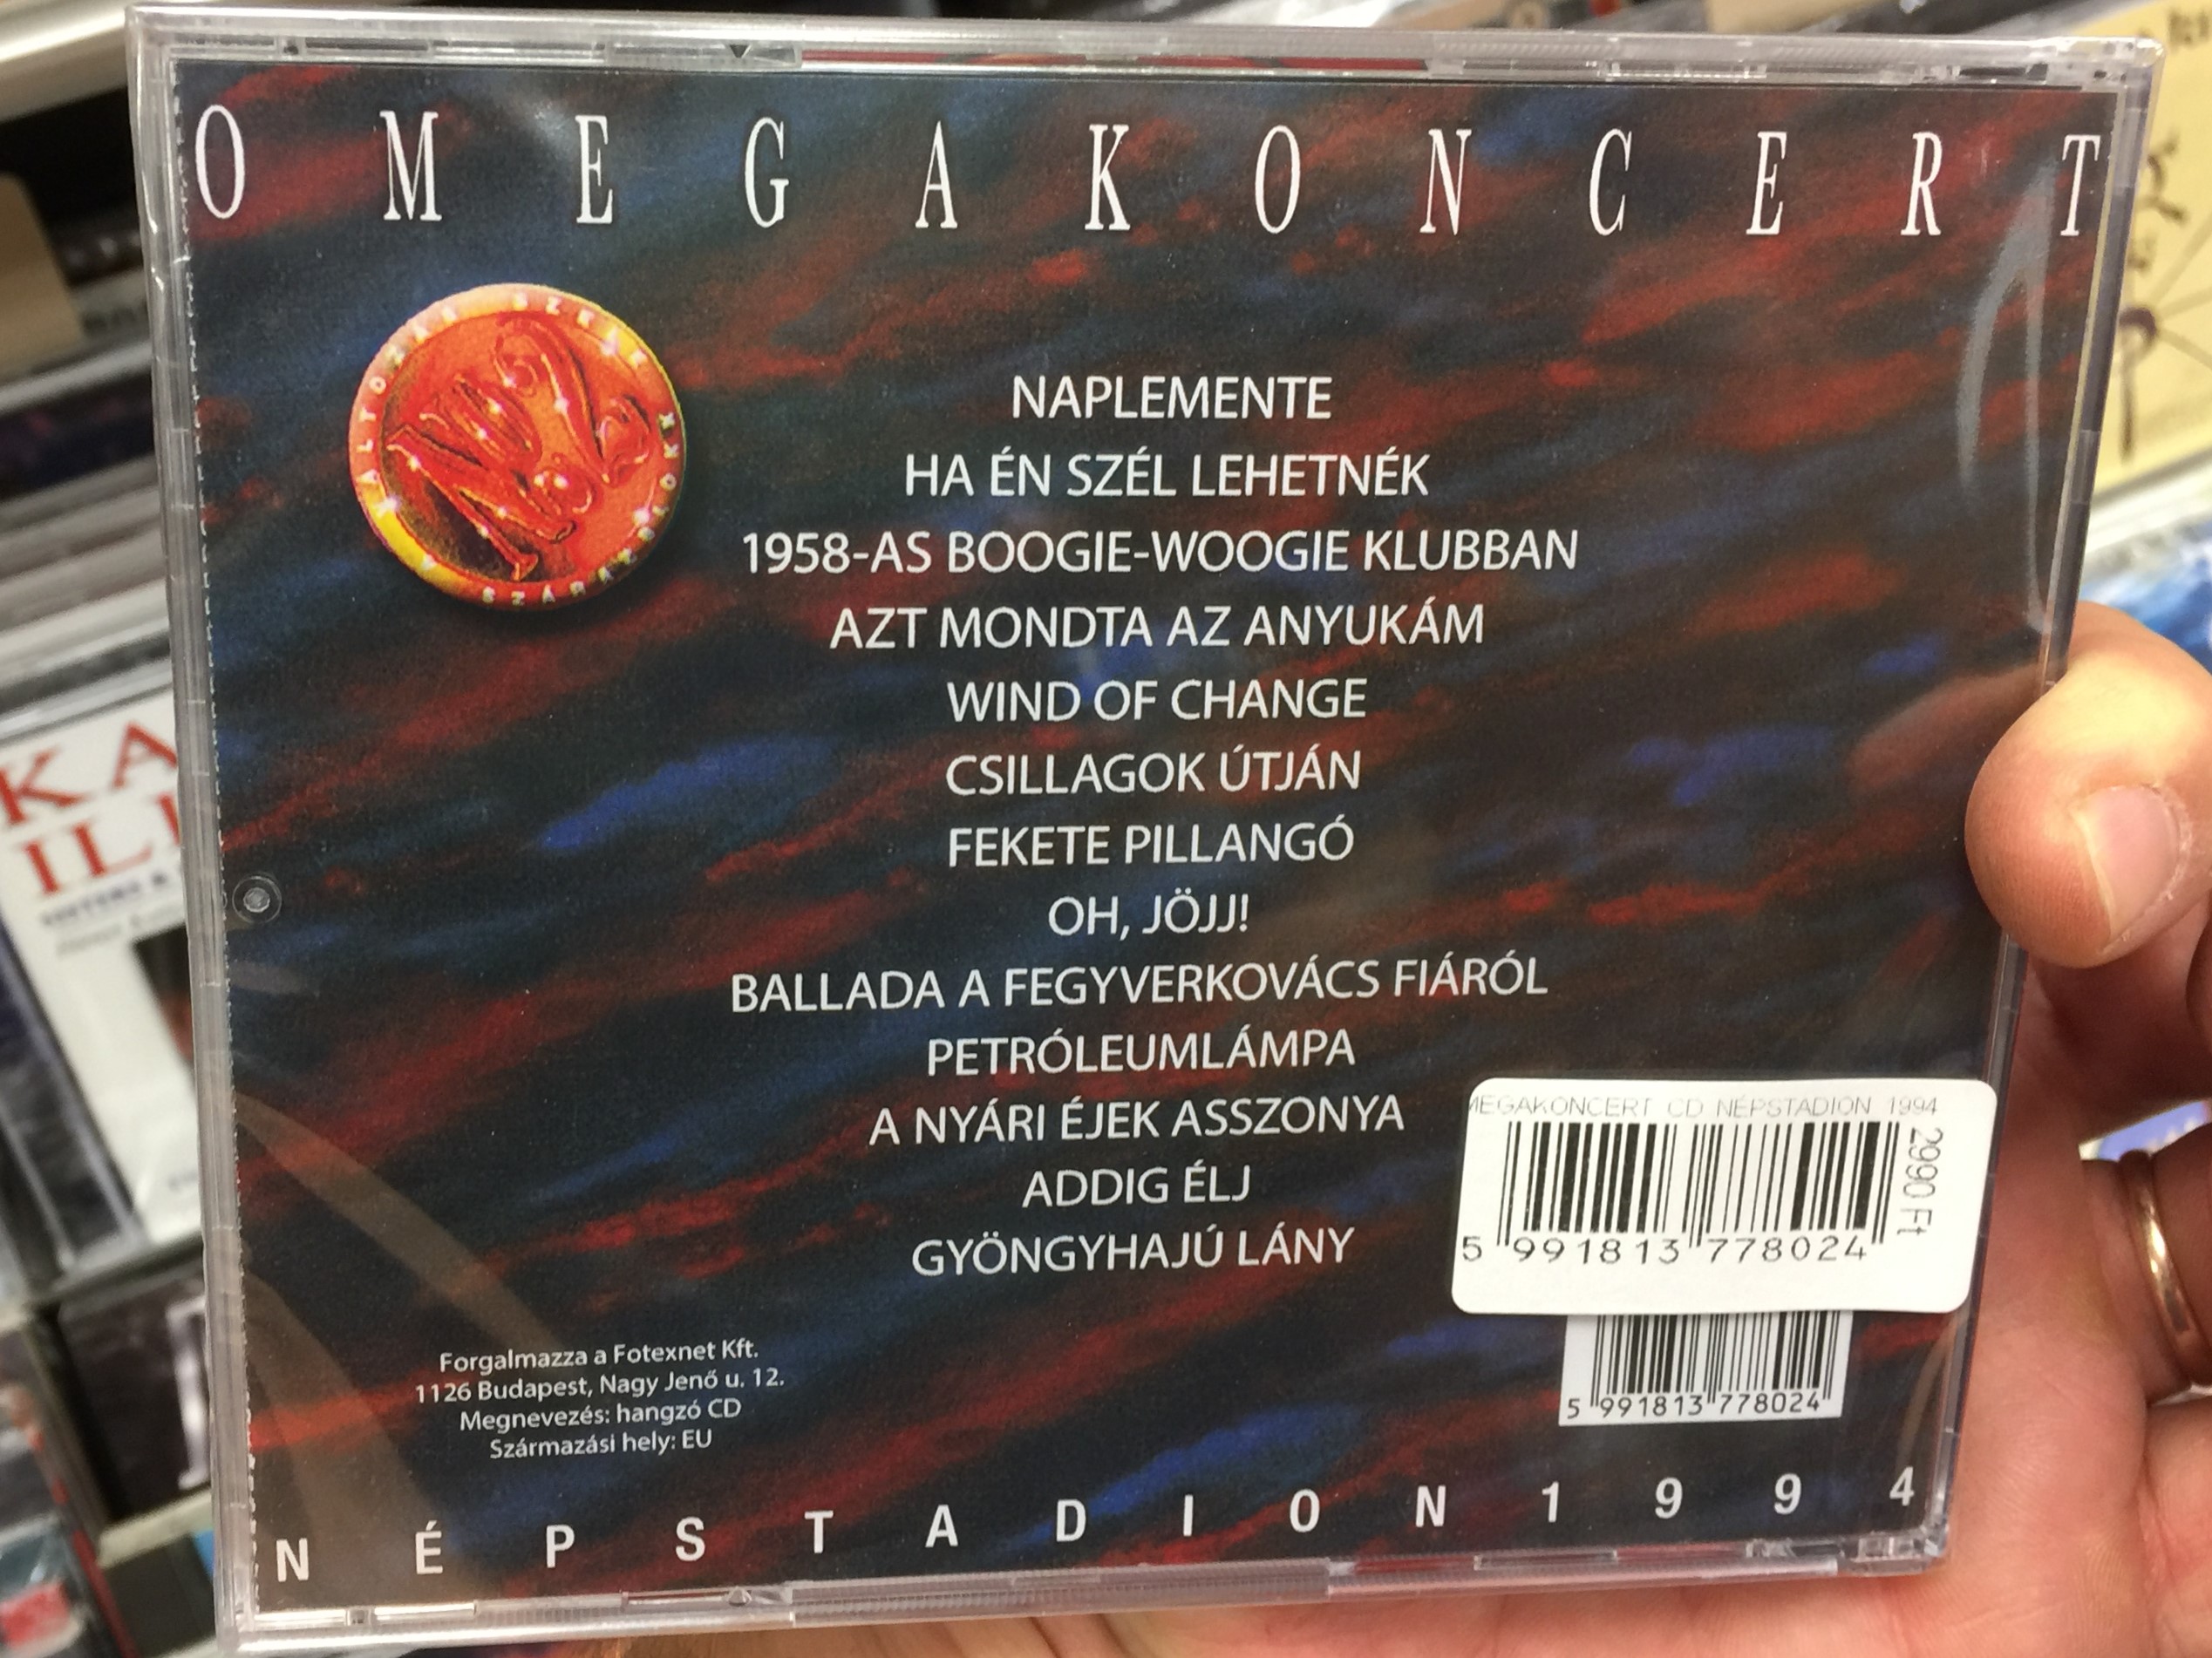 n-pstadion-1994-omegakoncert-mega-audio-cd-1994-5991813778024-2-.jpg